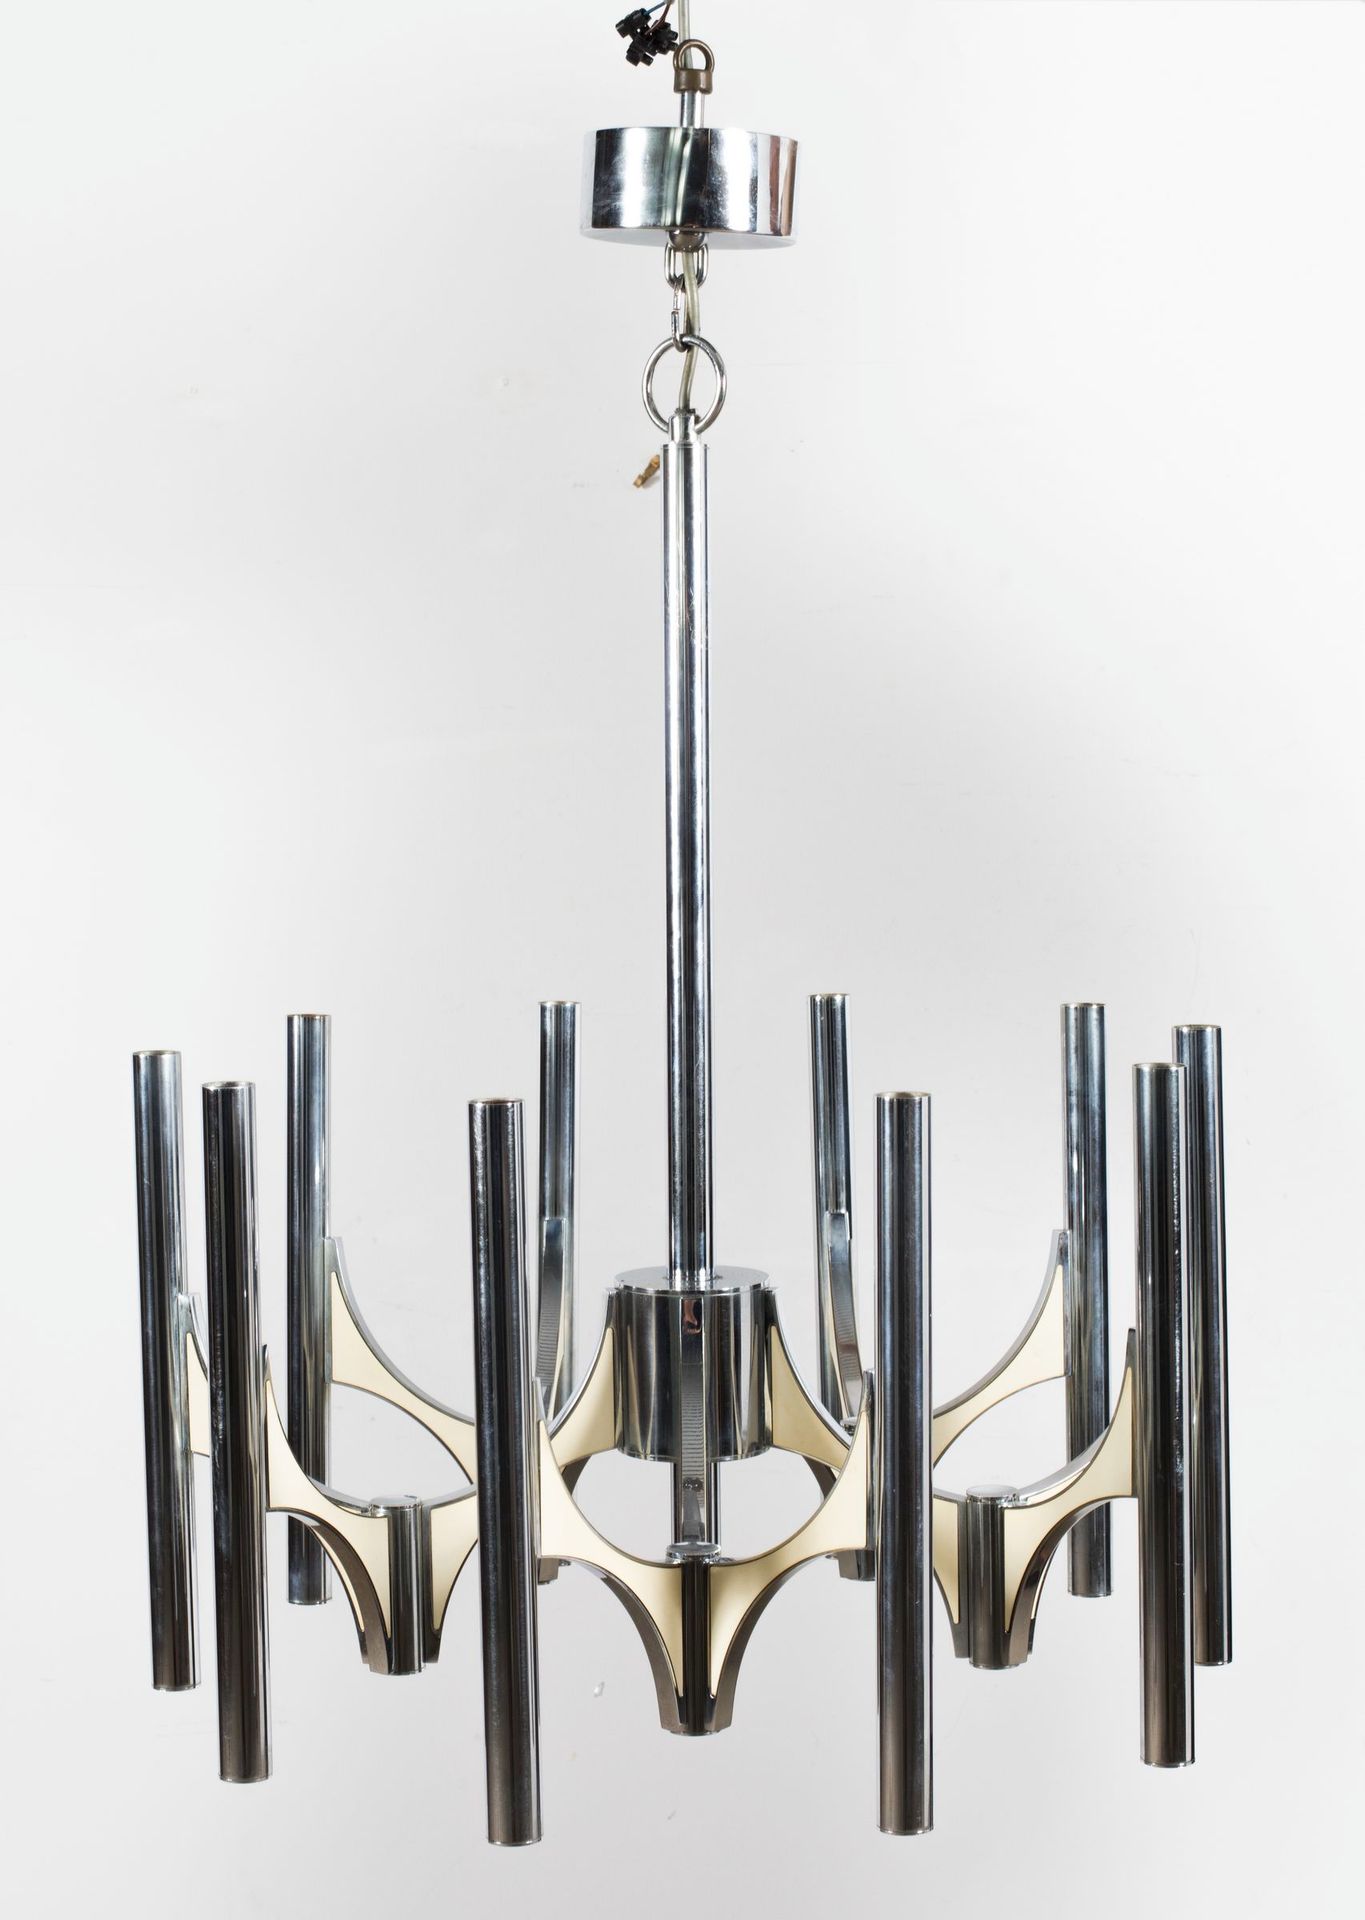 Null 盖塔诺-斯科拉里

镀镍和白漆的金属悬架，有十个灯臂。约1970年。

直径54厘米；高70厘米。